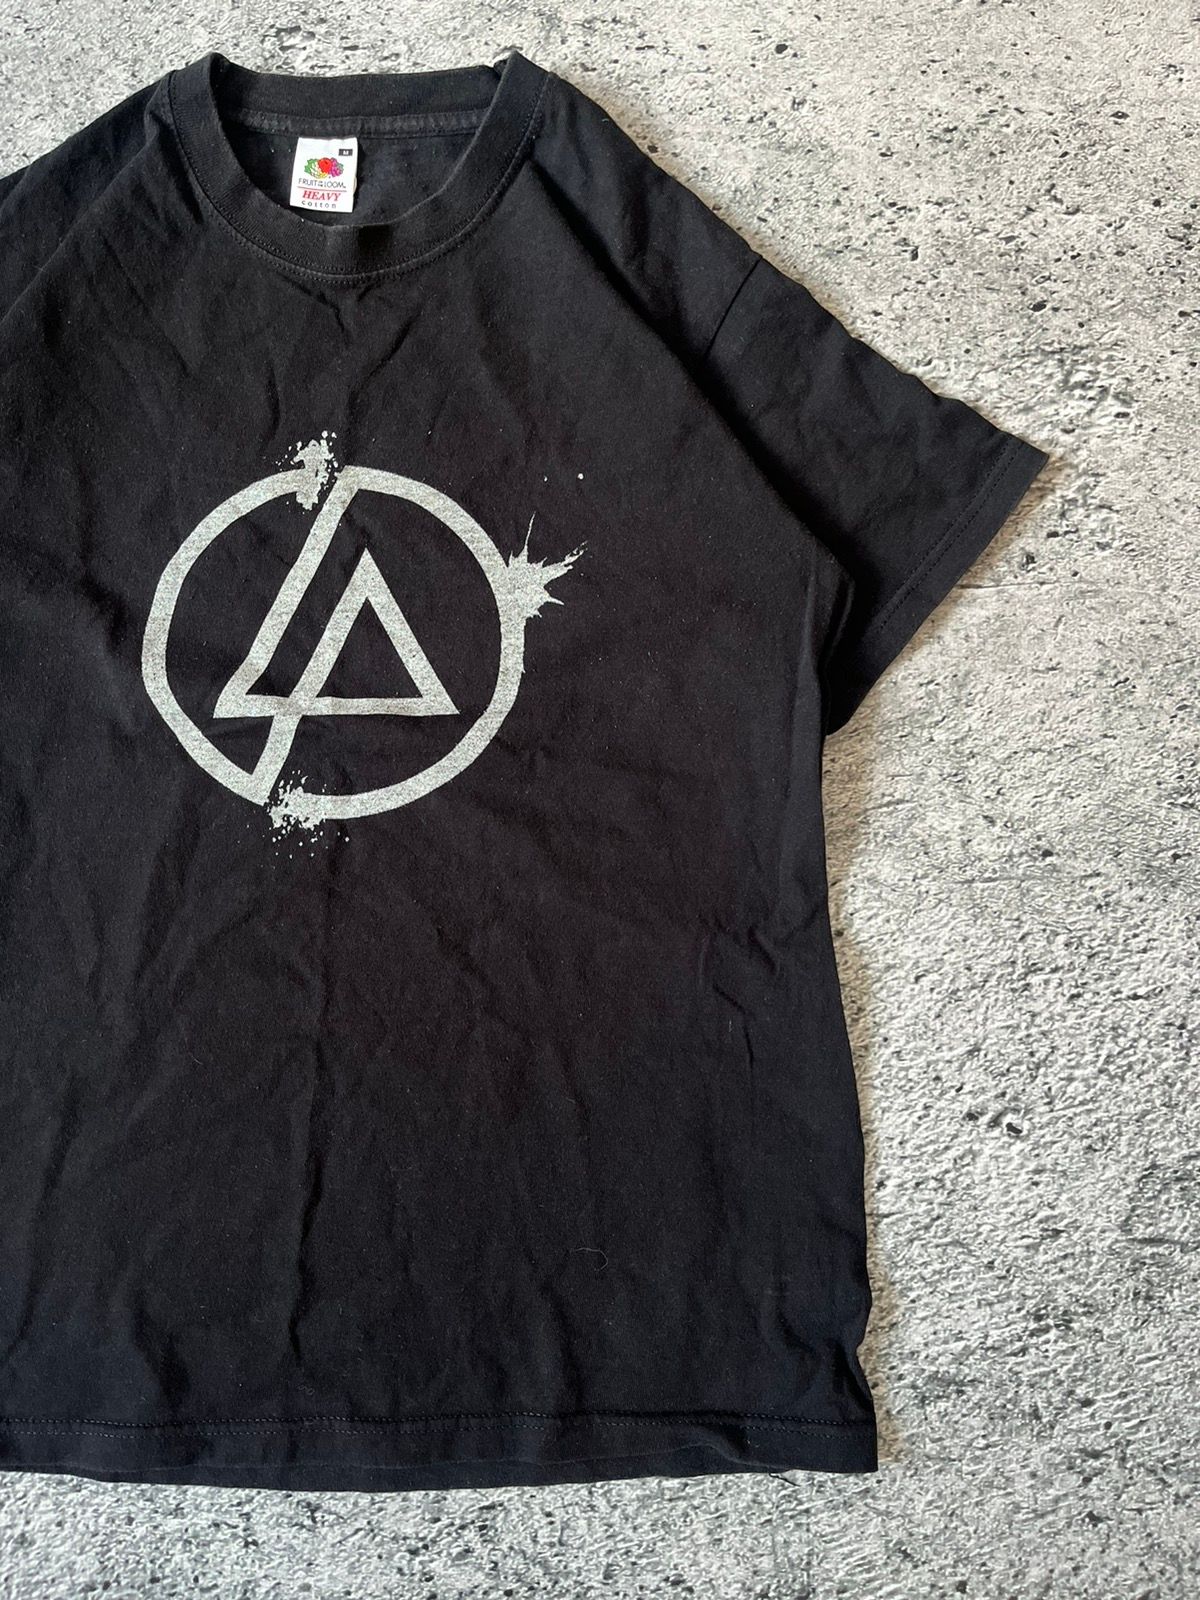 Vintage Vintage 2000 Linkin Park Promo Band T-Shirt Size US M / EU 48-50 / 2 - 3 Thumbnail